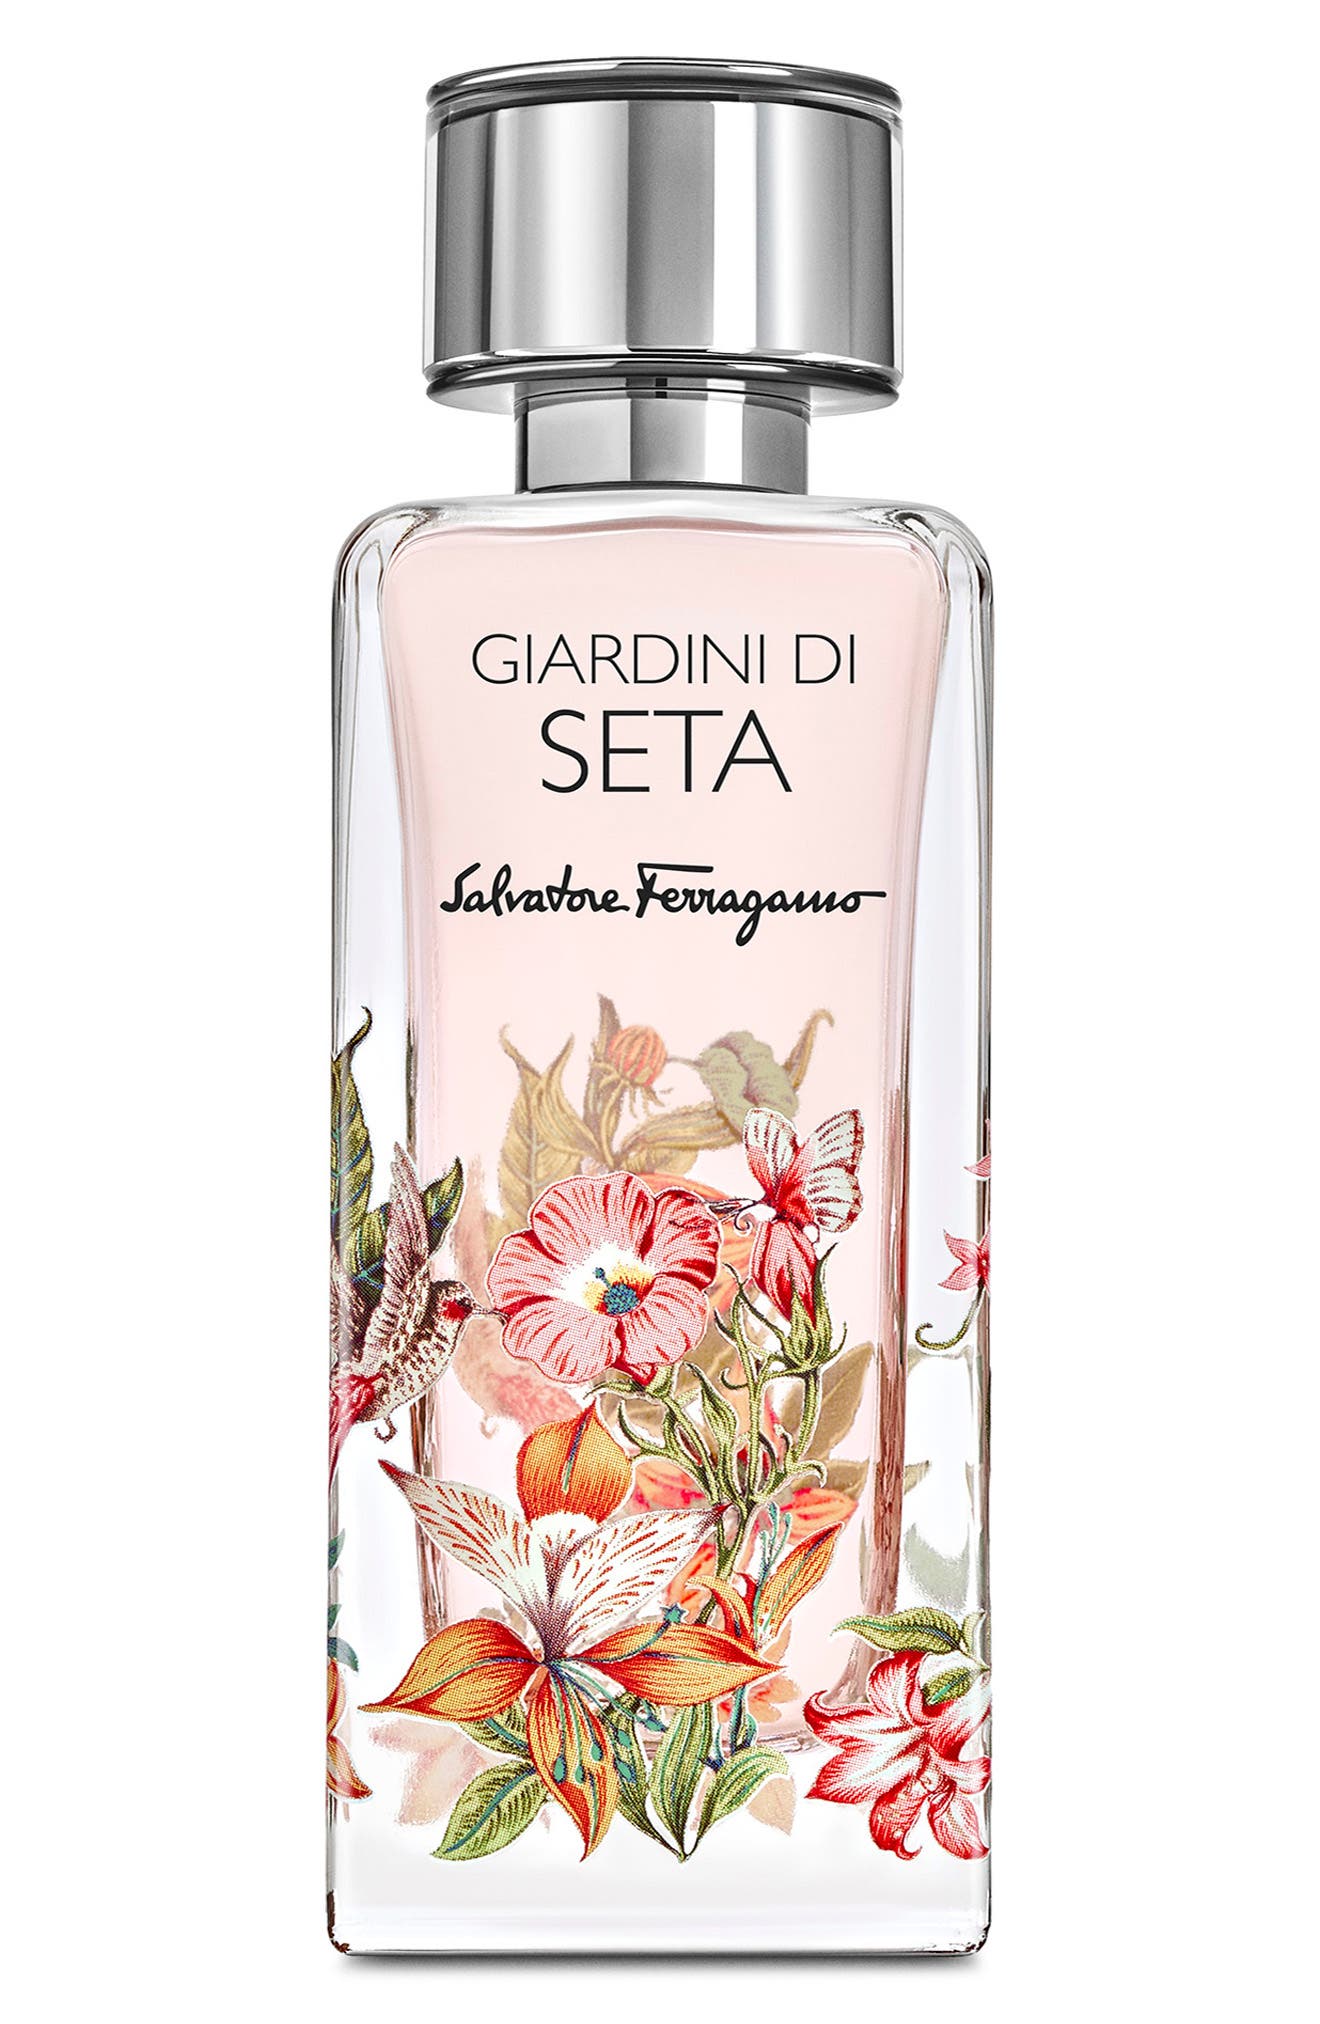 Salvatore Ferragamo Giardini di Seta Eau de Parfum at Nordstrom, Size 3.4 Oz